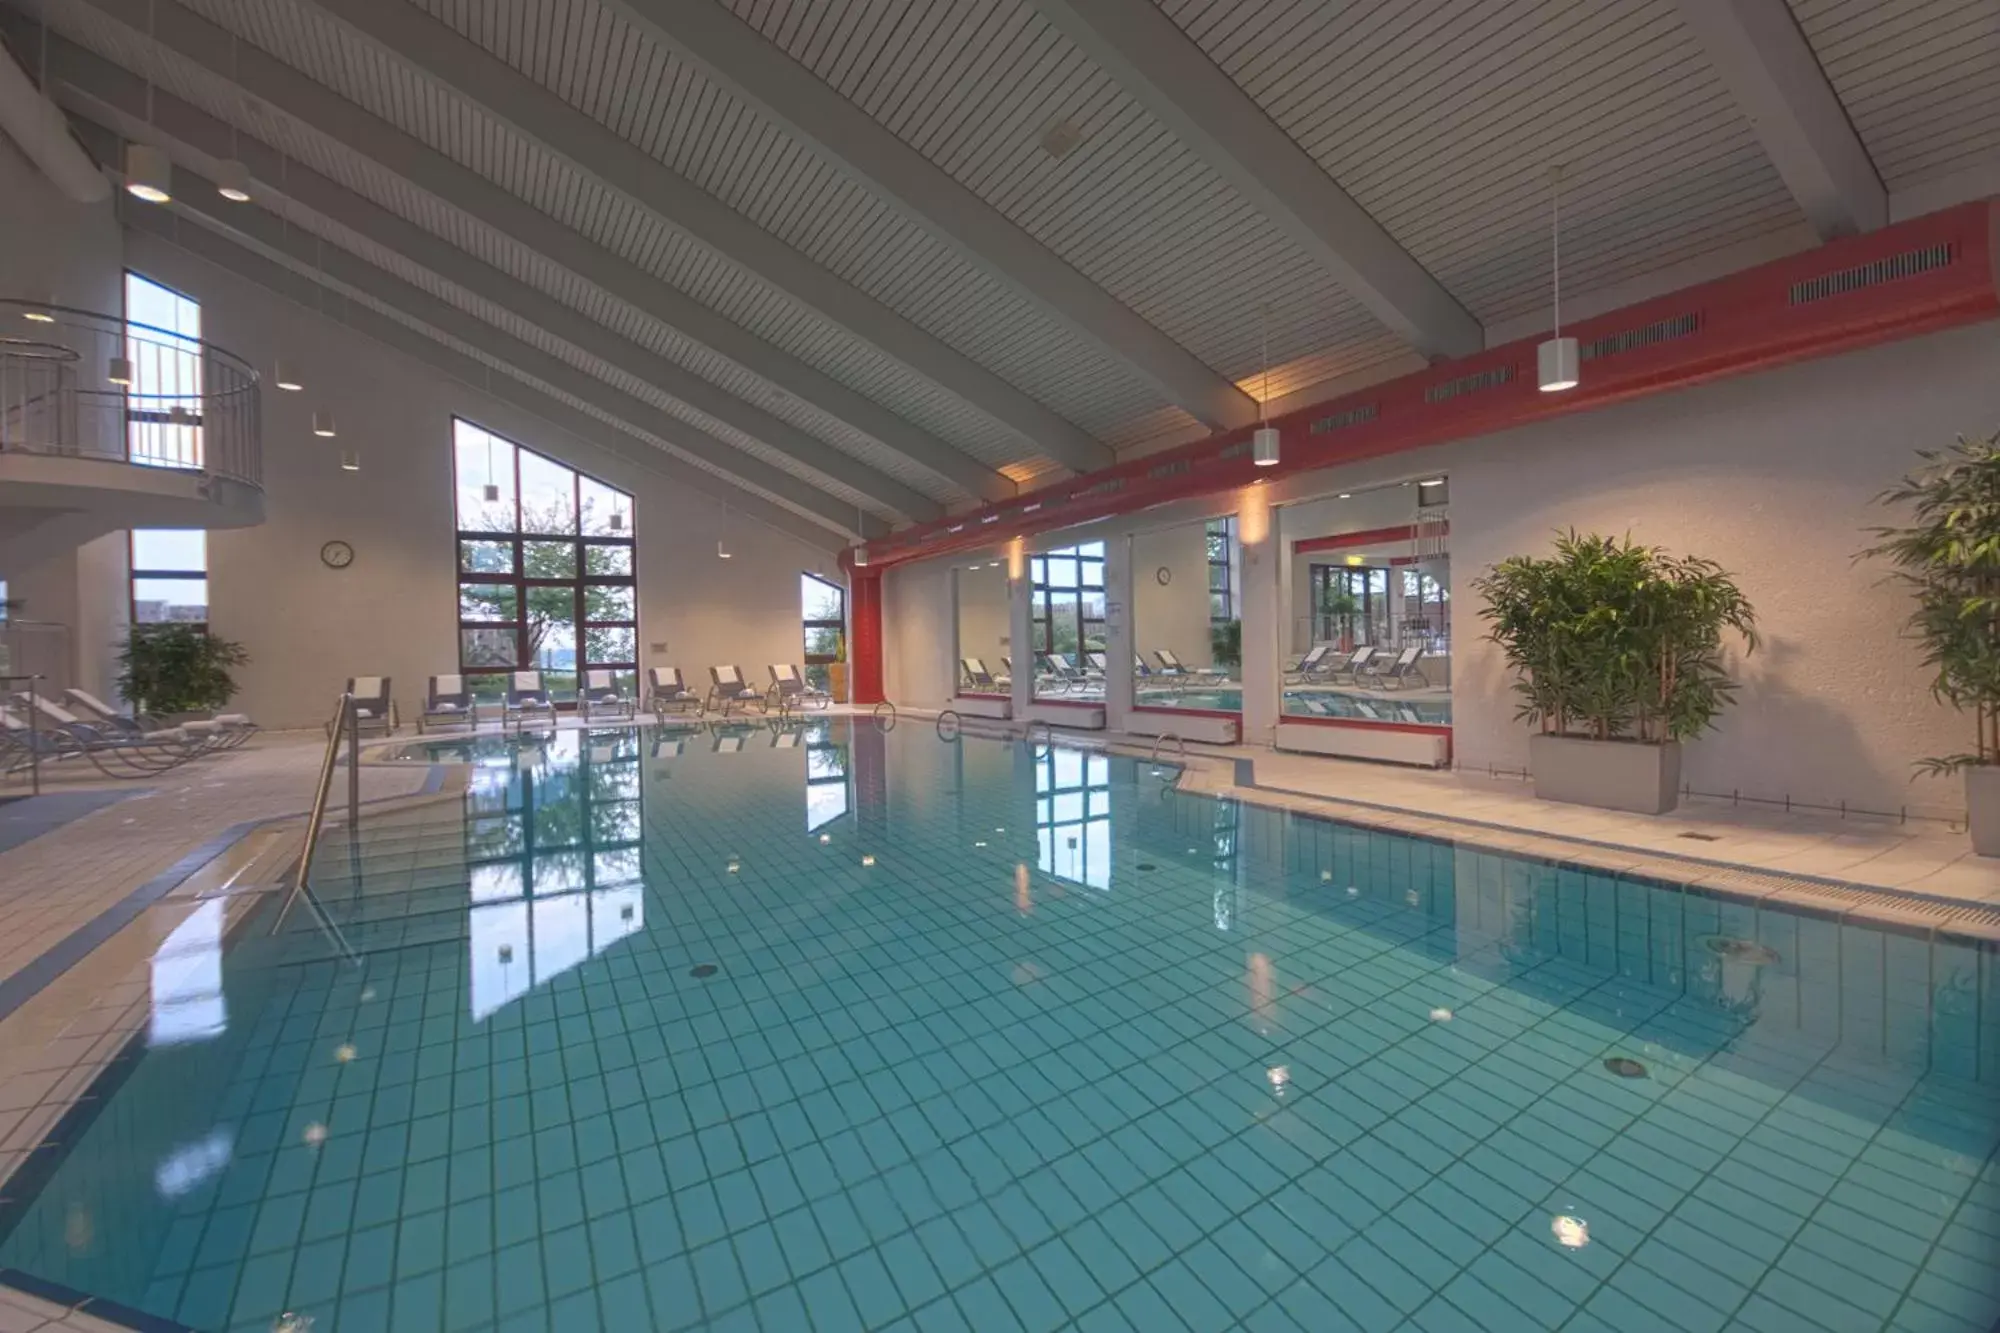 Swimming pool in Trans World Hotel Kranichhöhe